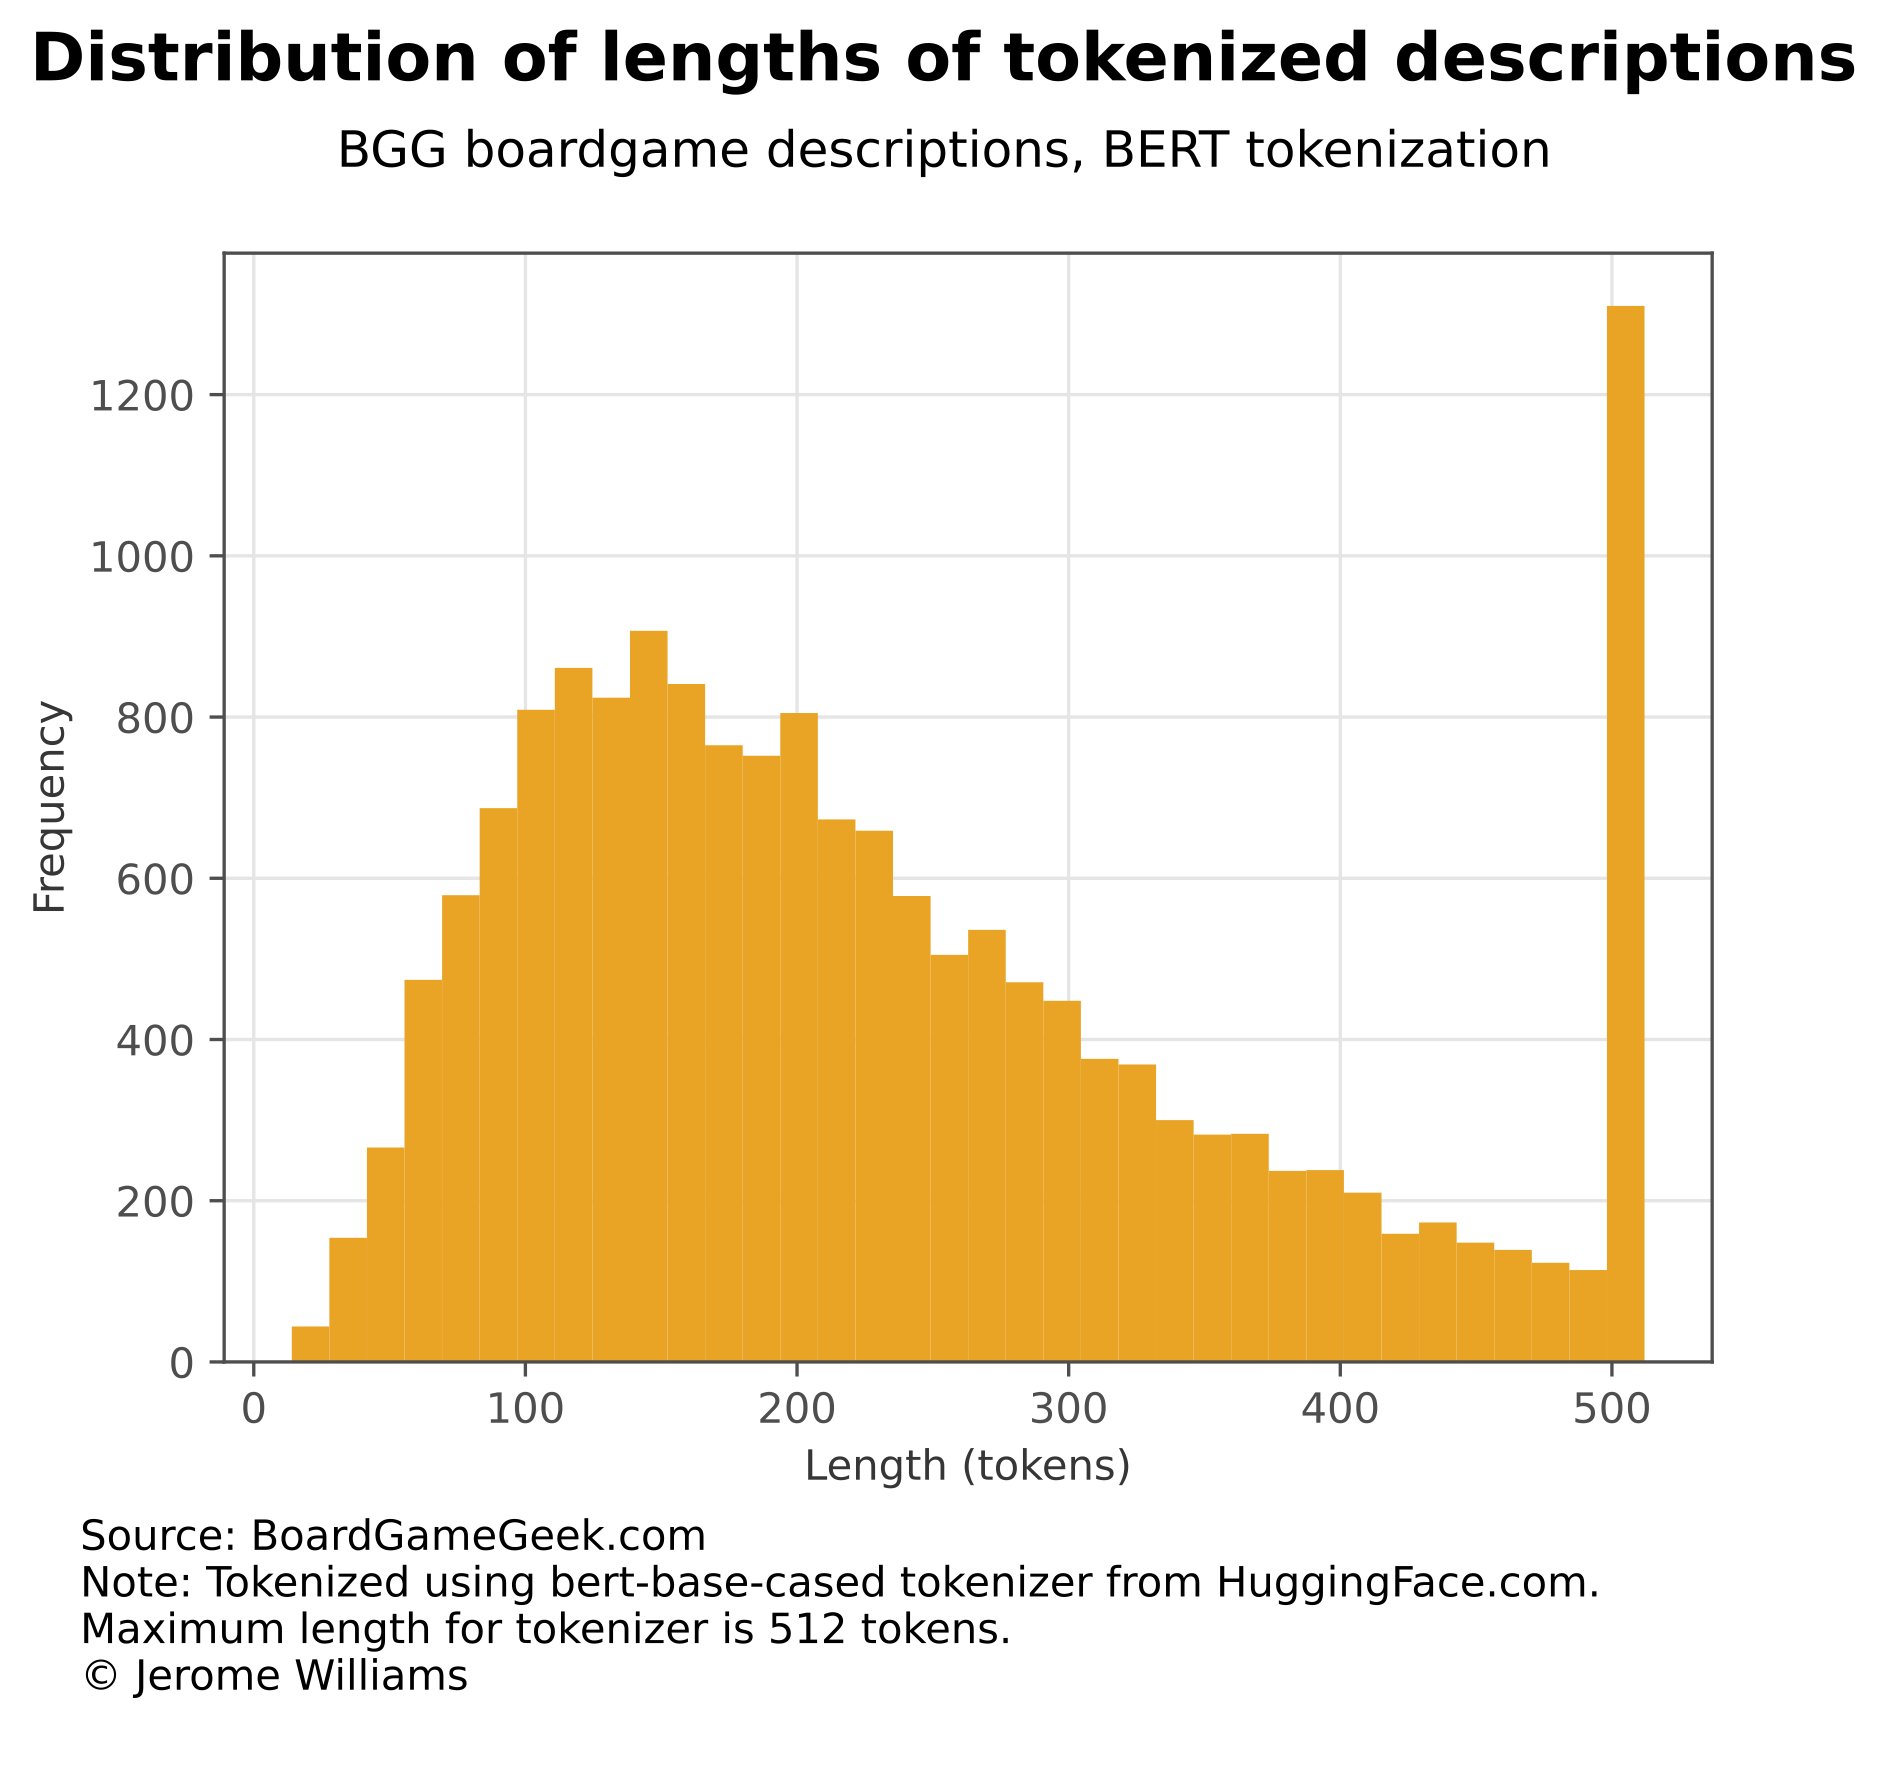 Distribution of tokenized description lengths